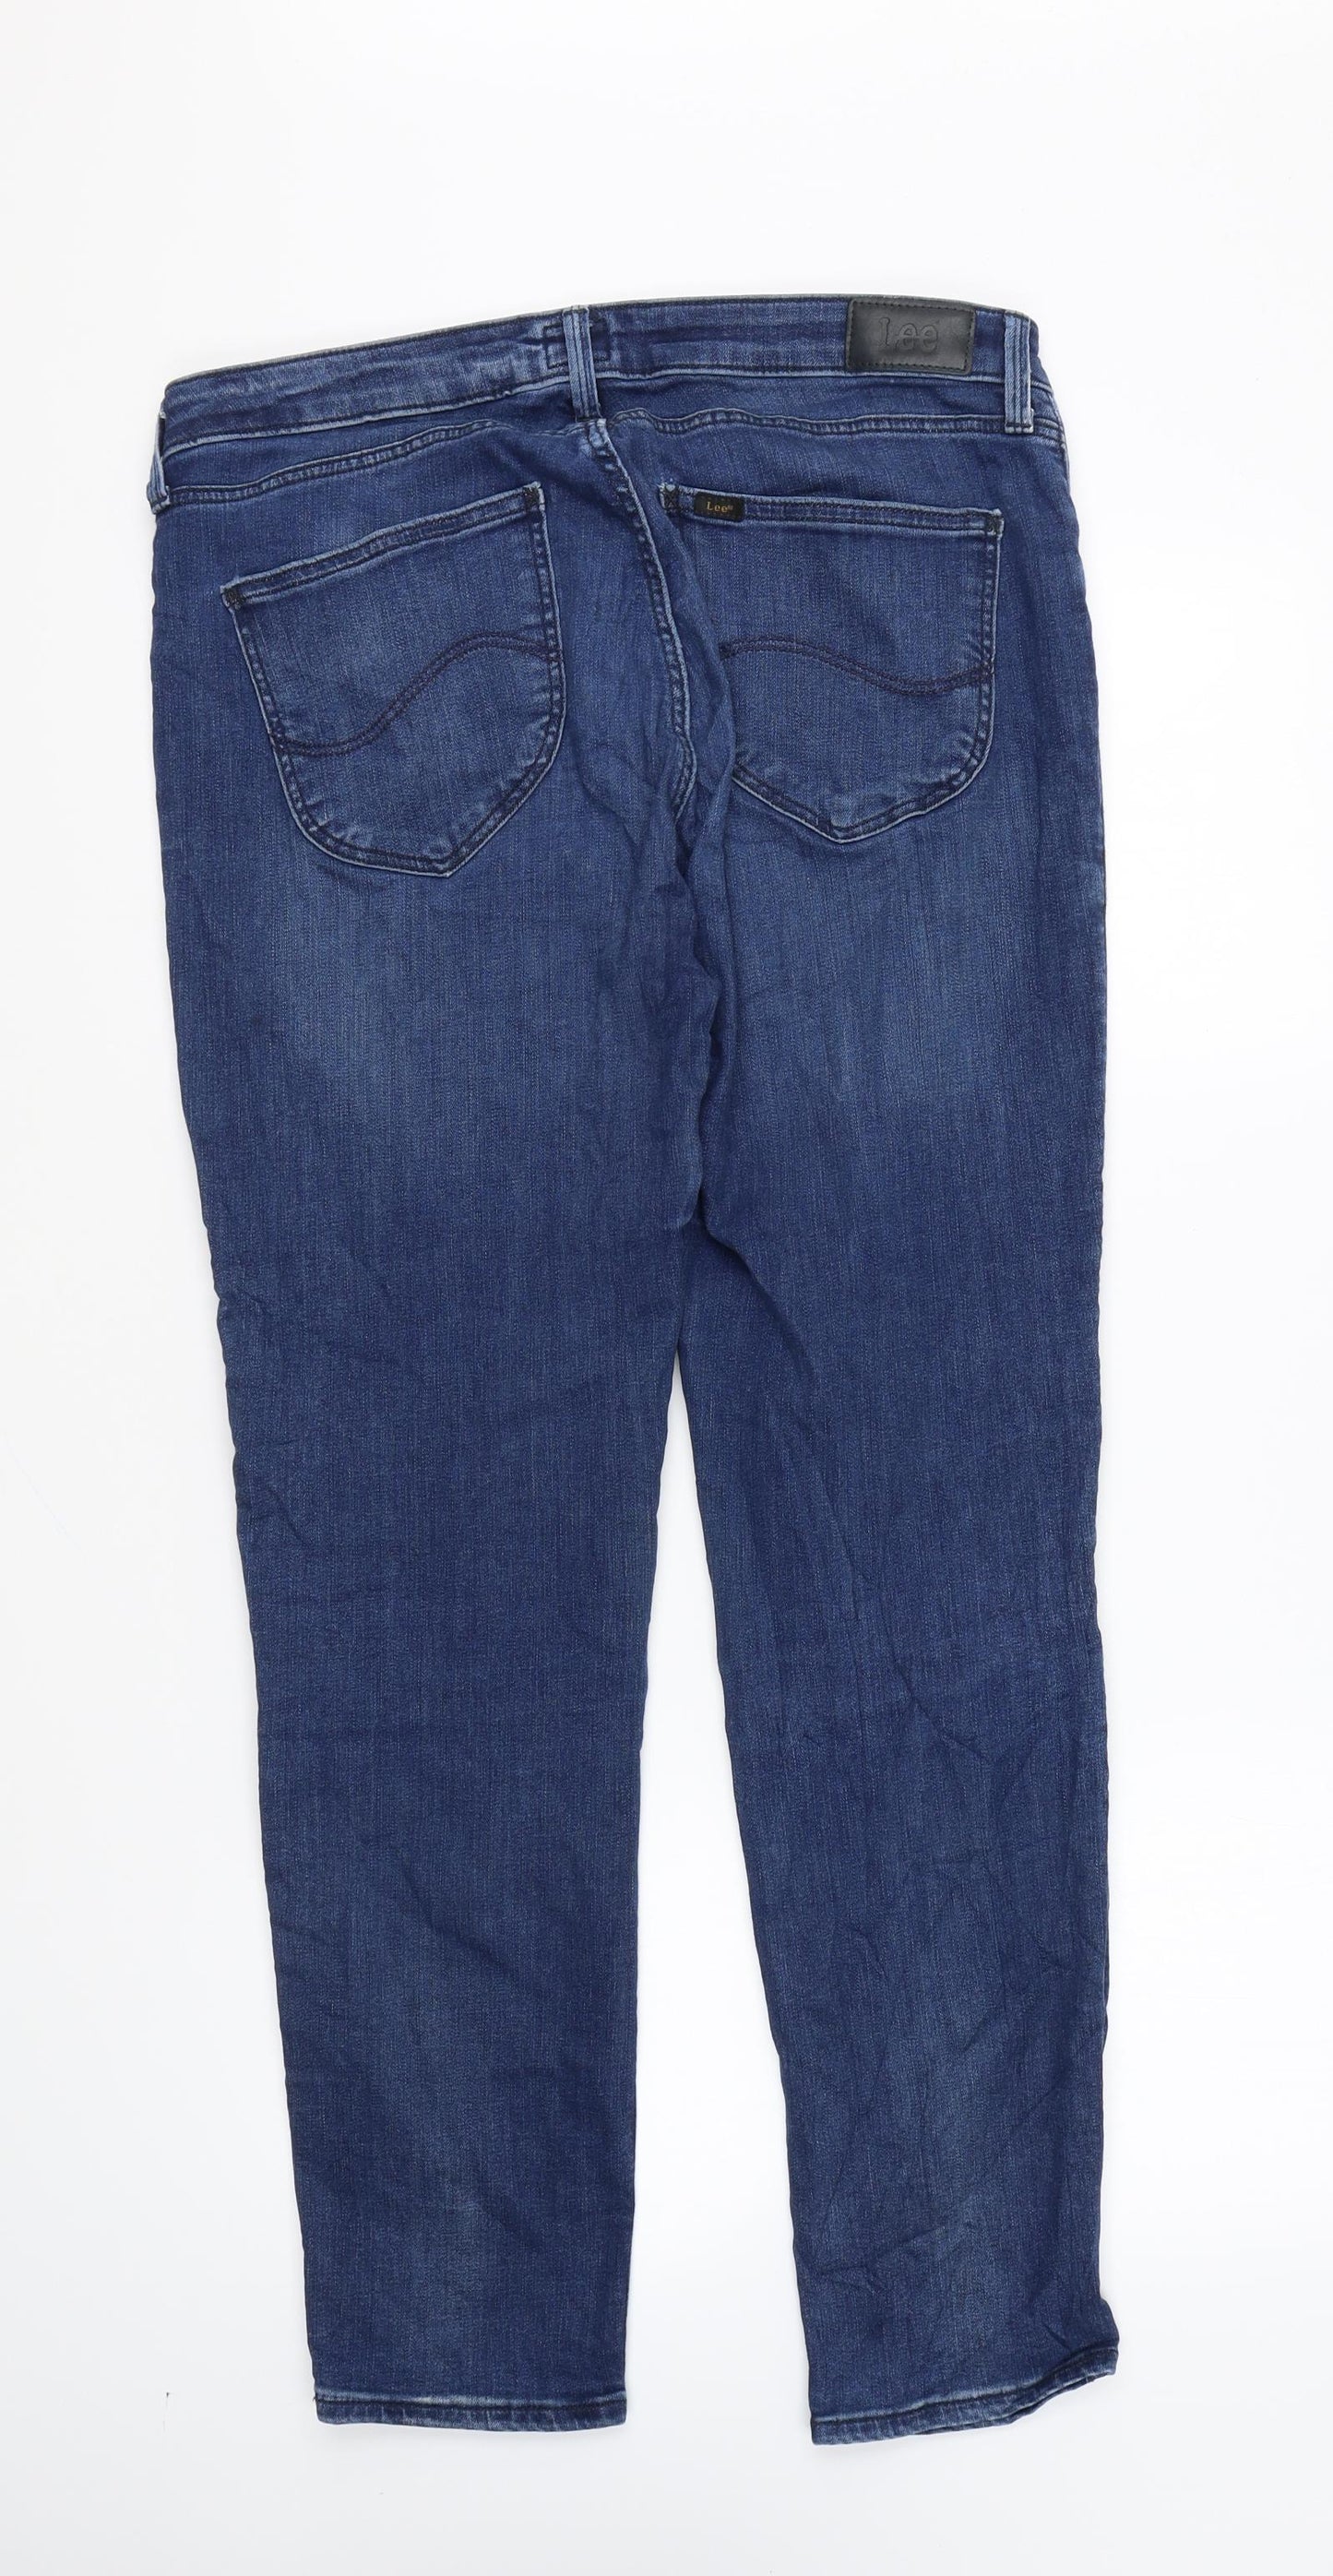 Lee Womens Blue Cotton Skinny Jeans Size 34 in L28 in Regular Zip